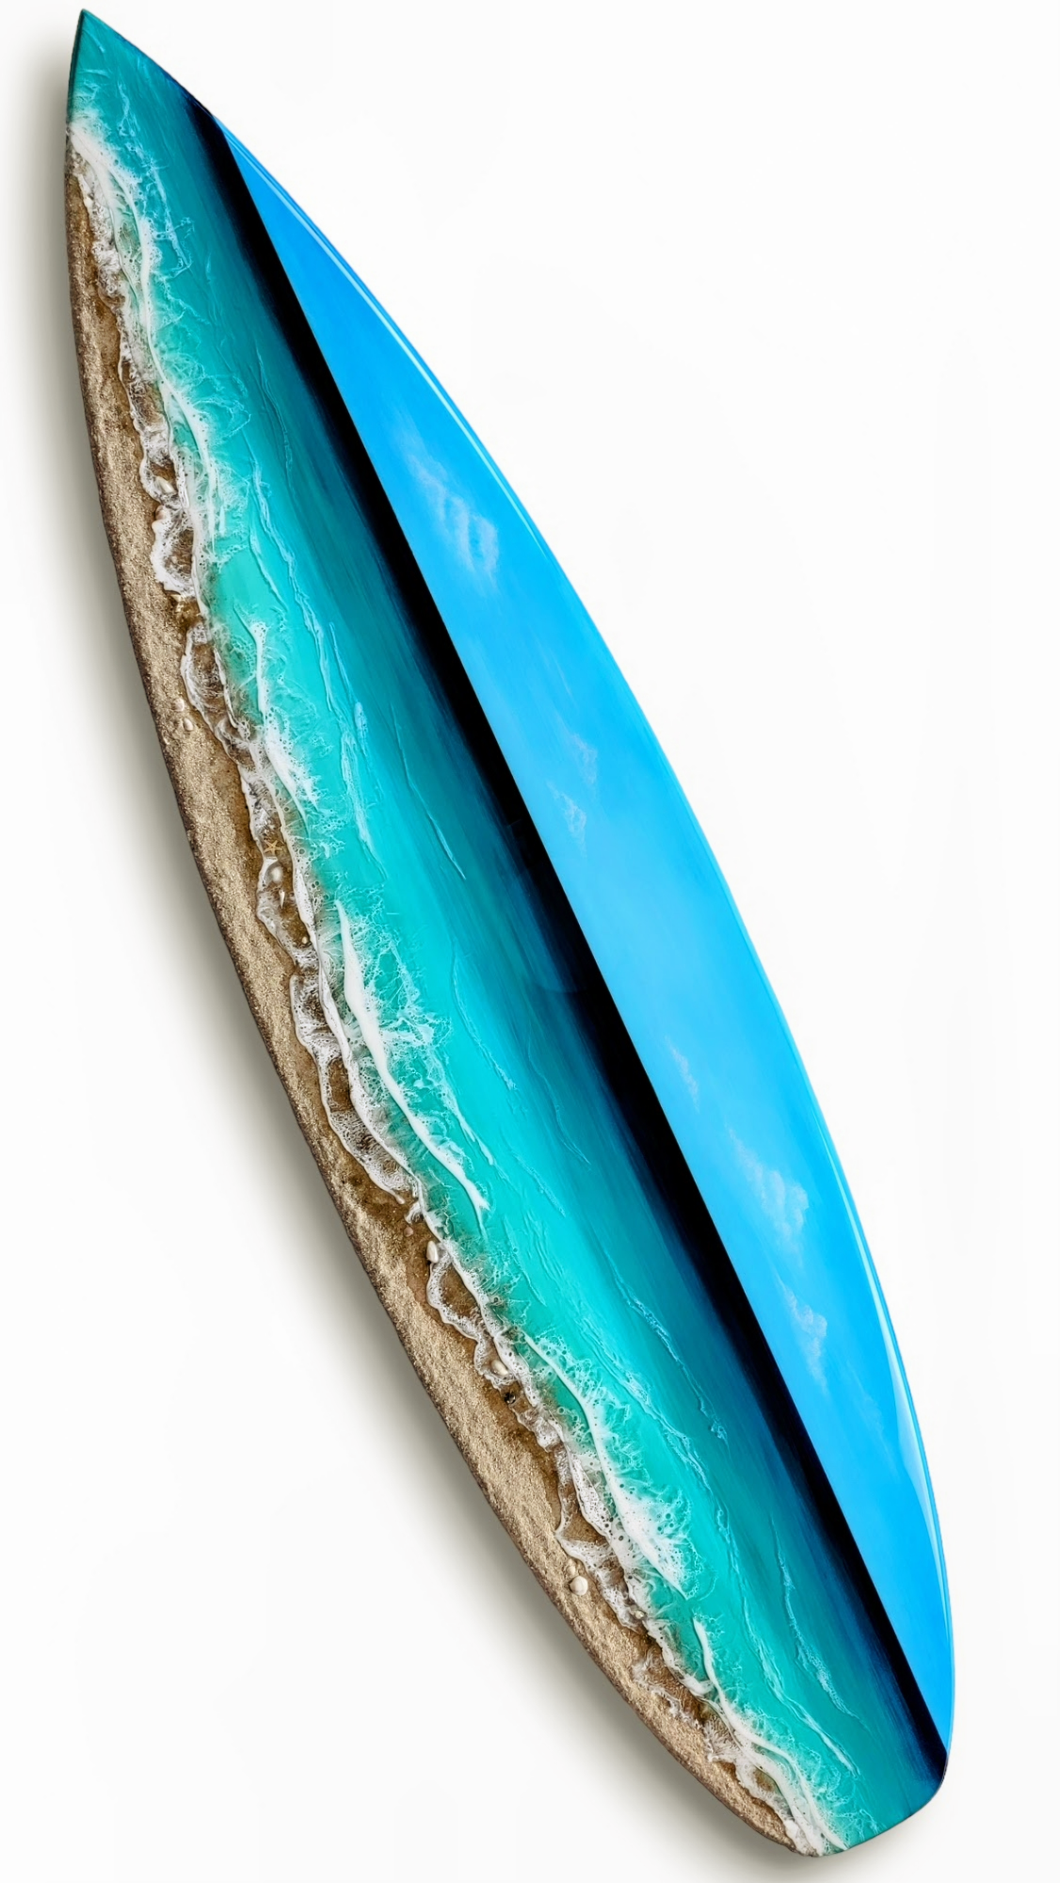 5ft Siesta Key Beach Horizon Surfboard